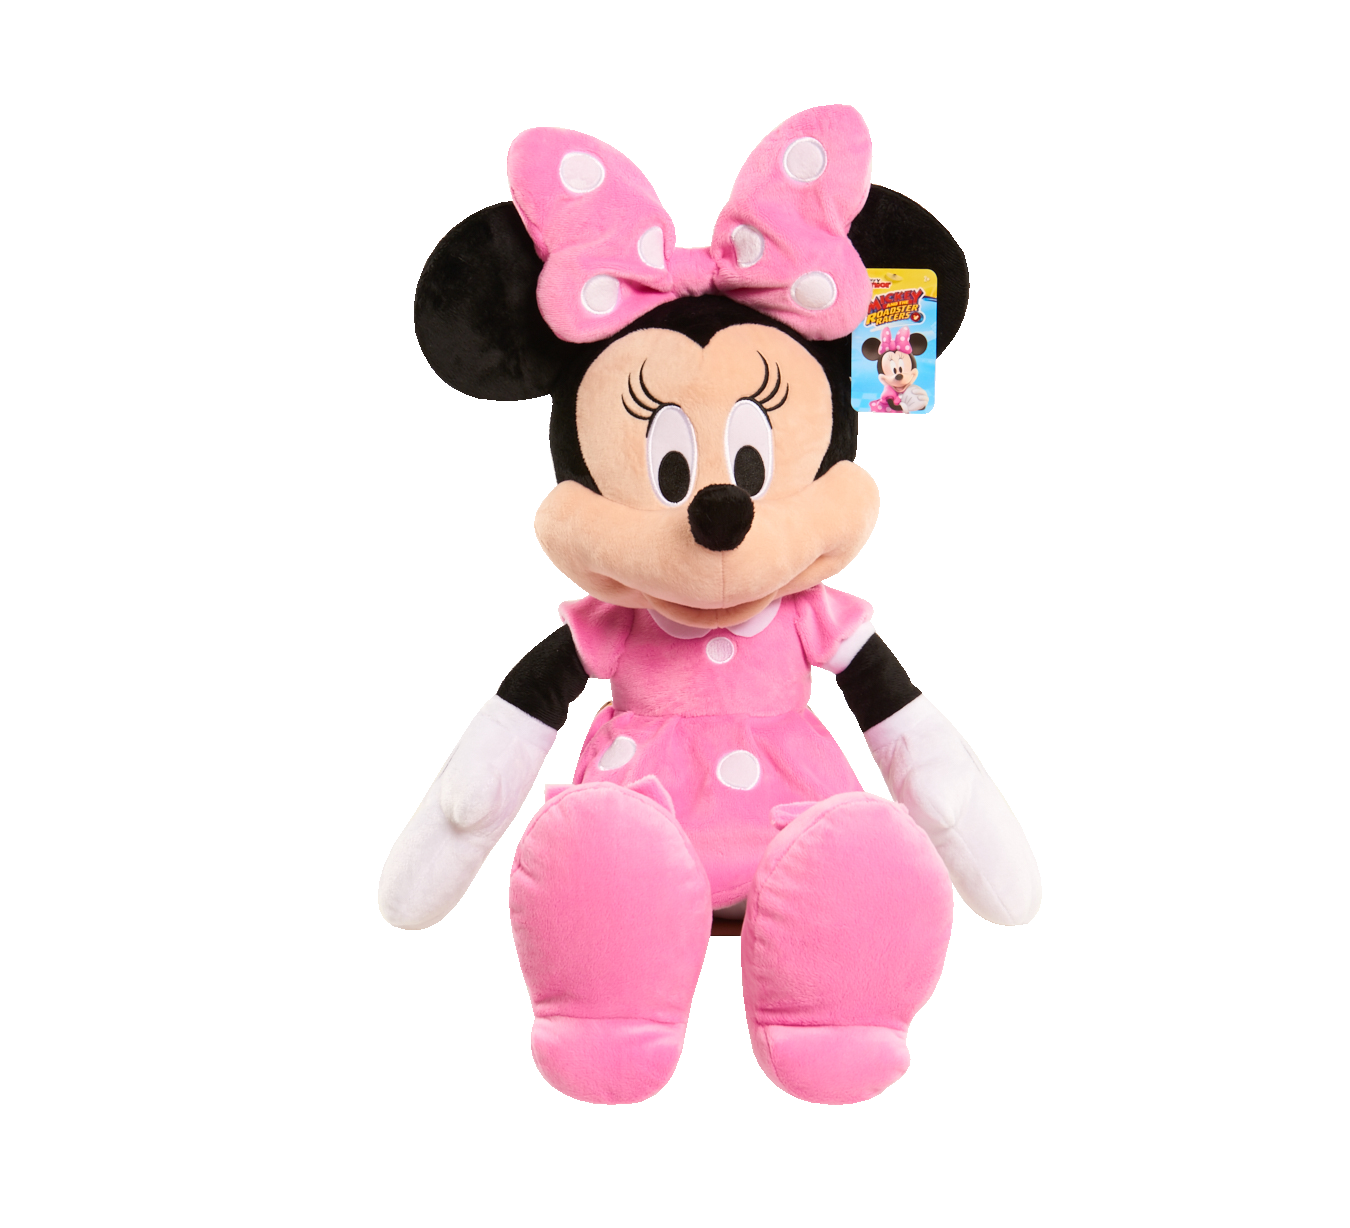 Disney Minnie Mouse Large Plush - image 2 of 4